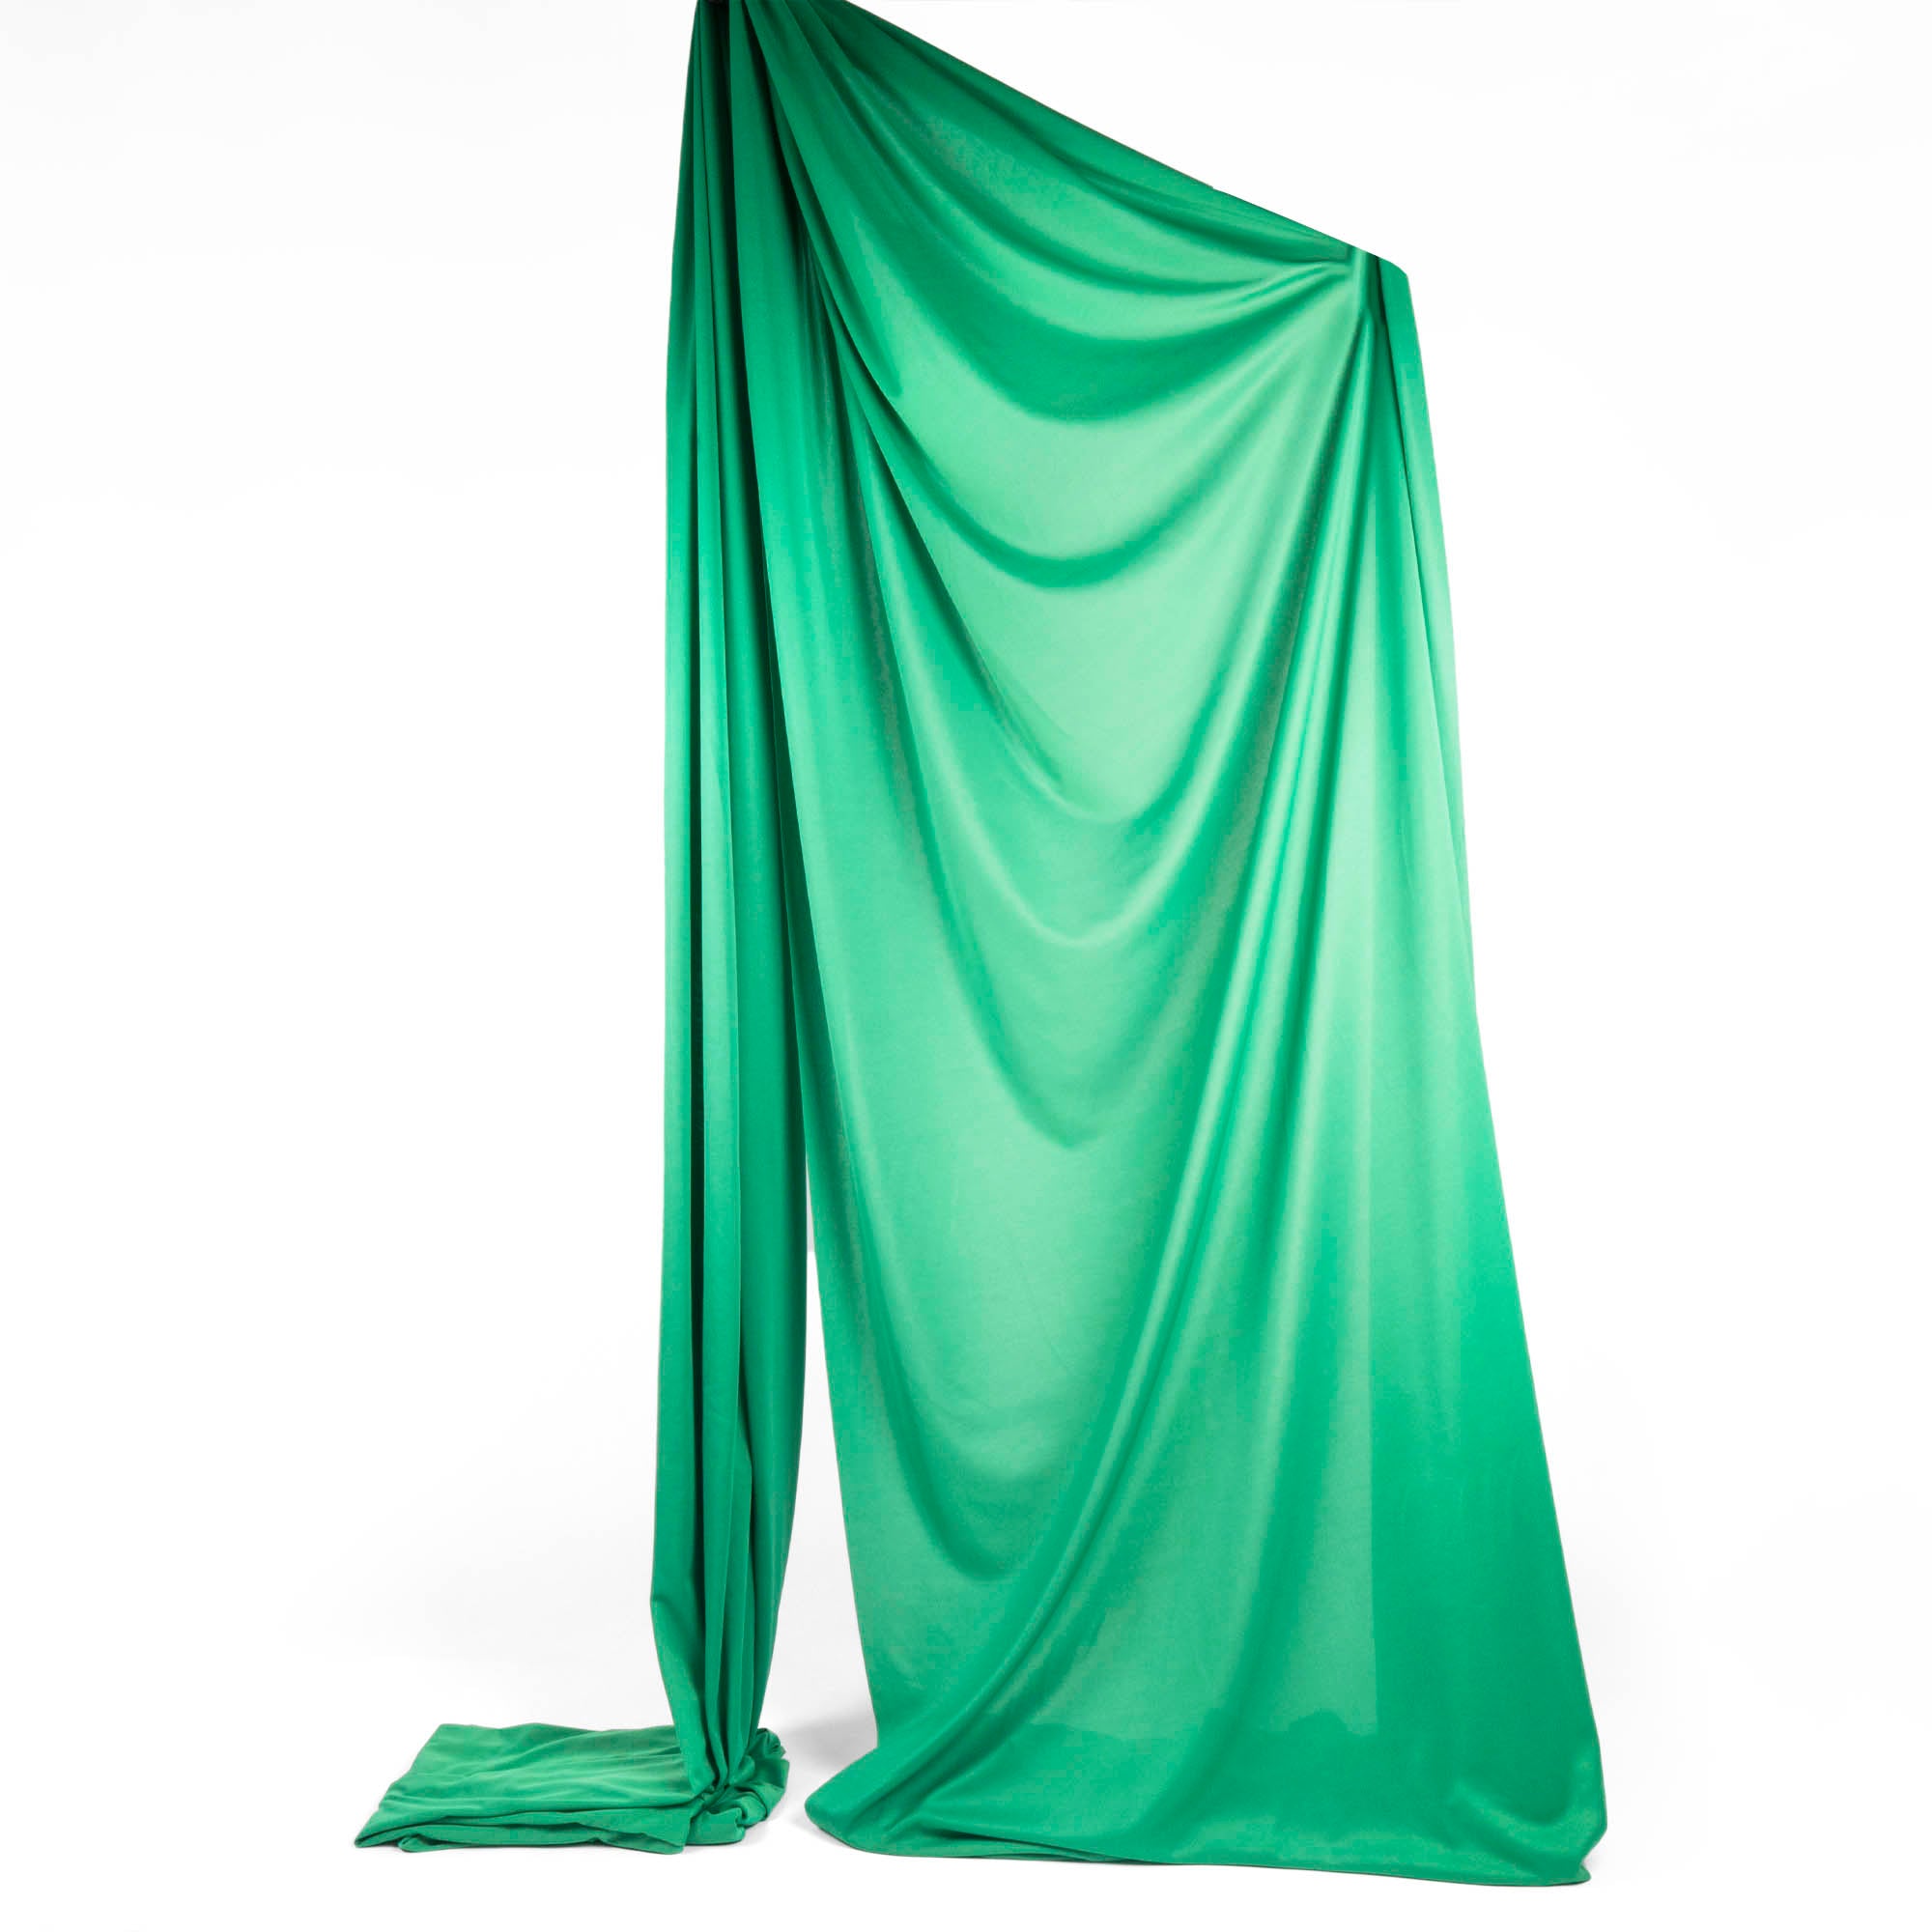 Firetoys youth aerial silk in kelly green rigged